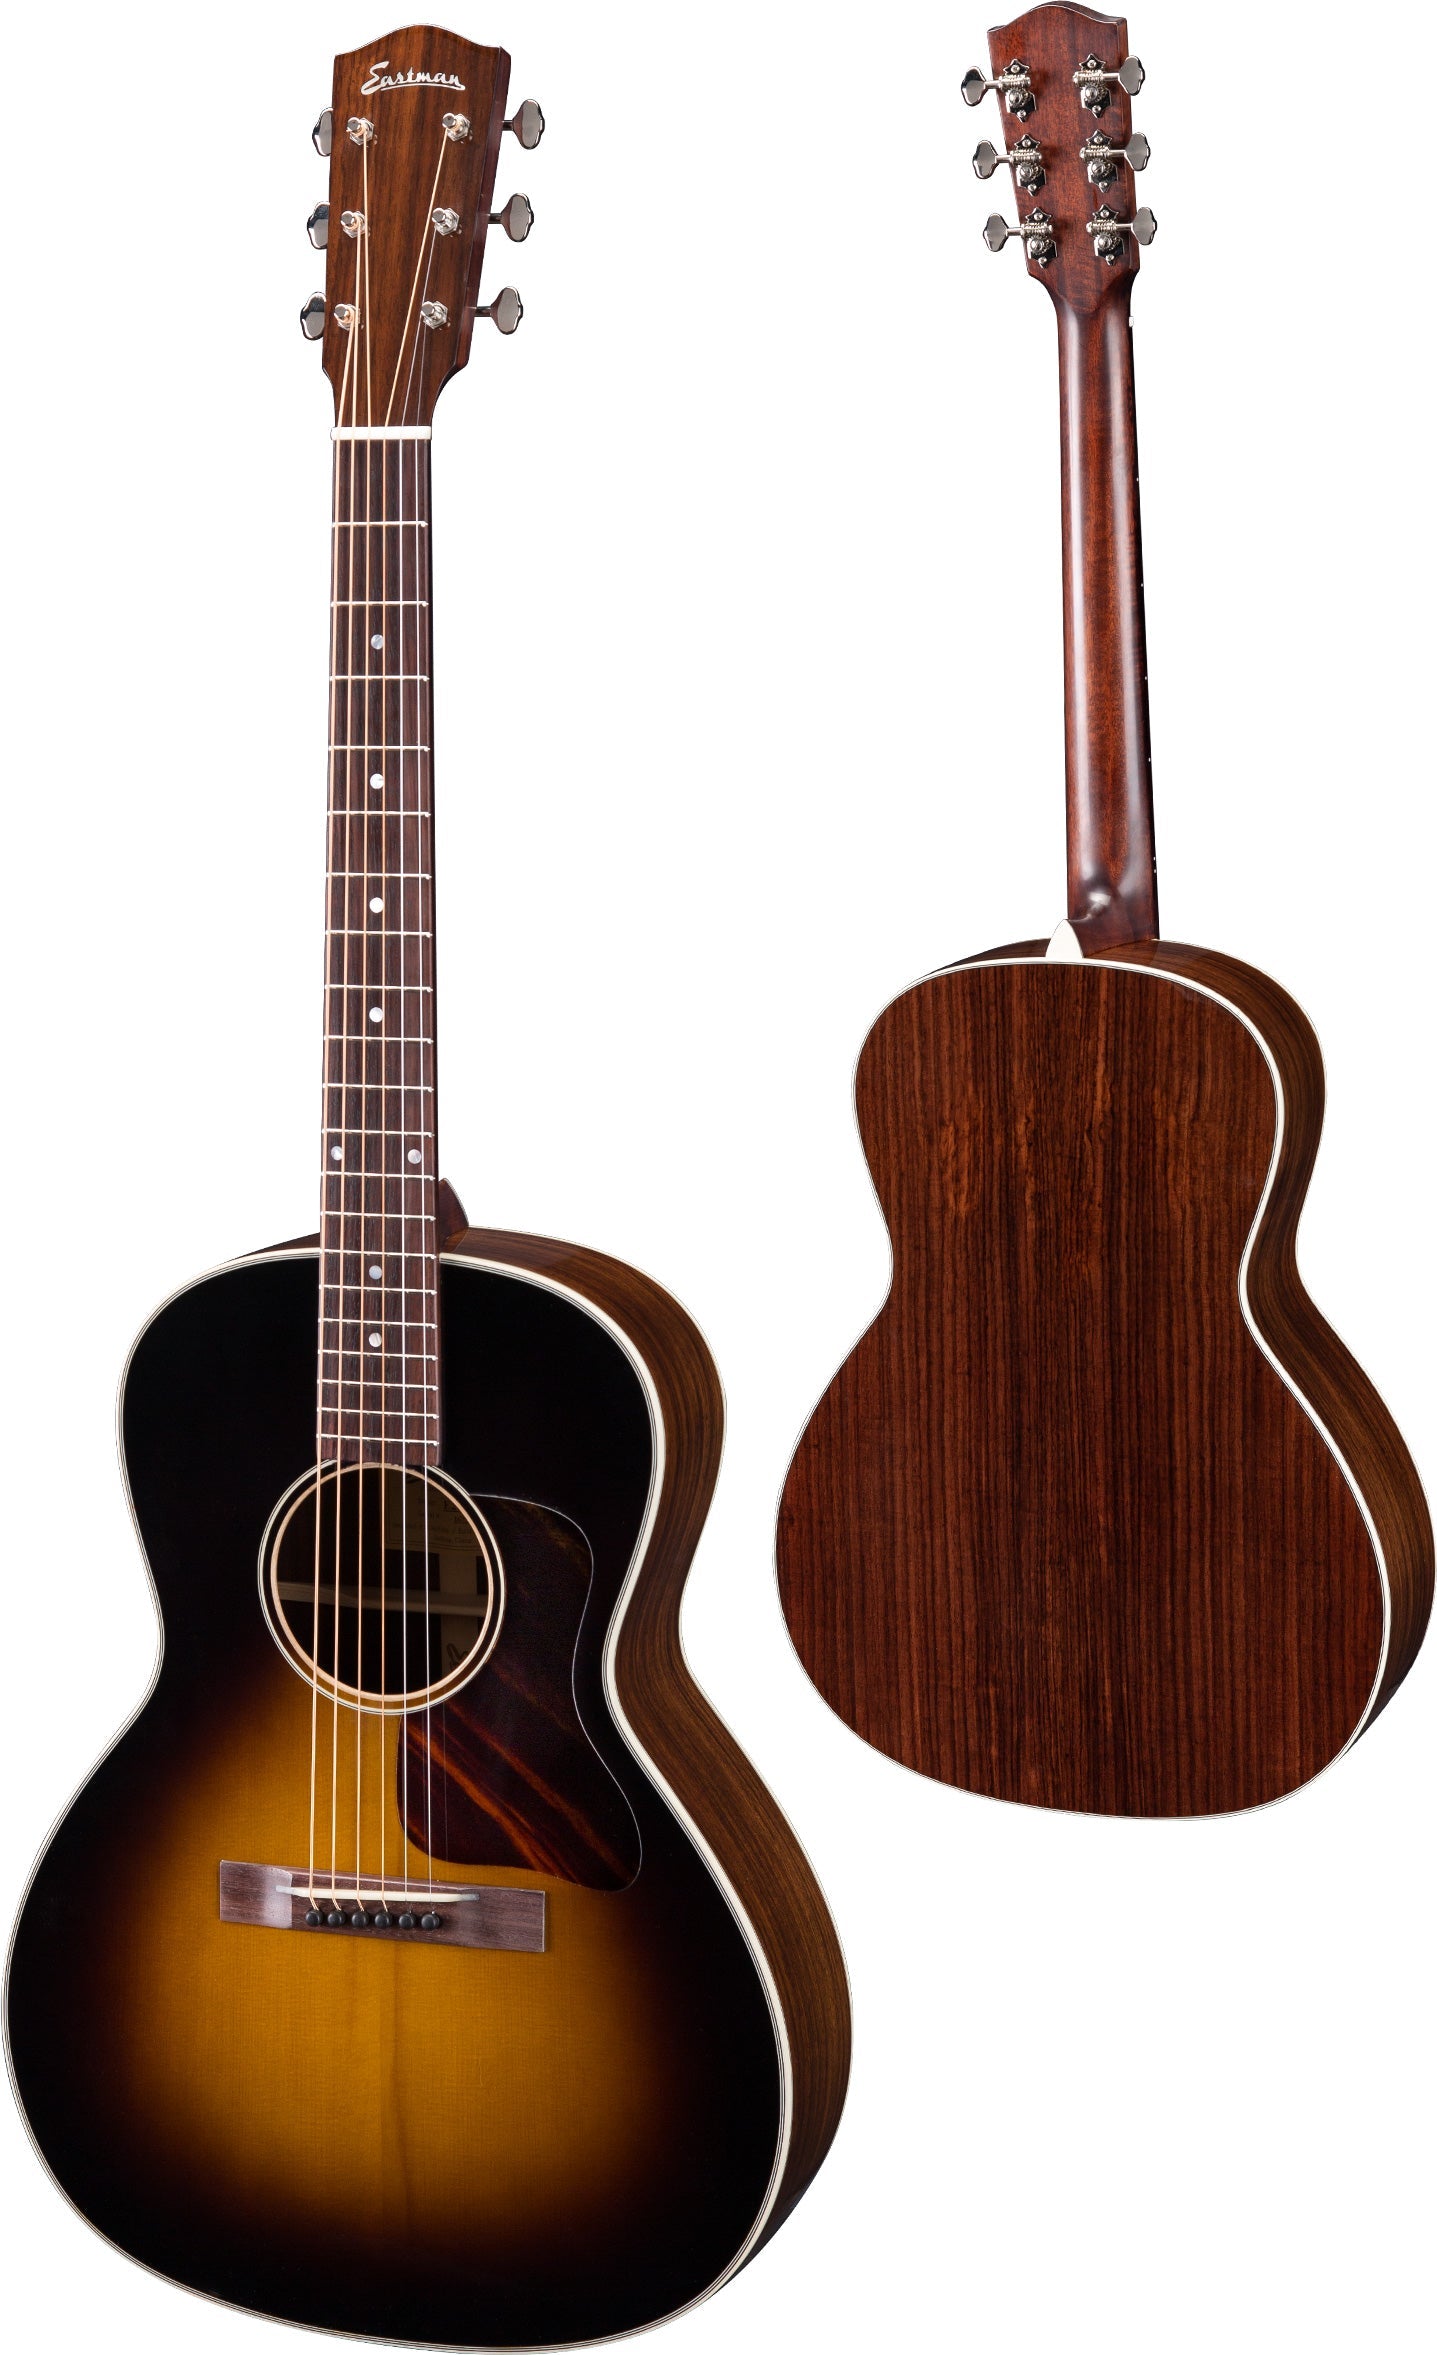 Eastman E20 00 SS TC, Acoustic Guitar for sale at Richards Guitars.